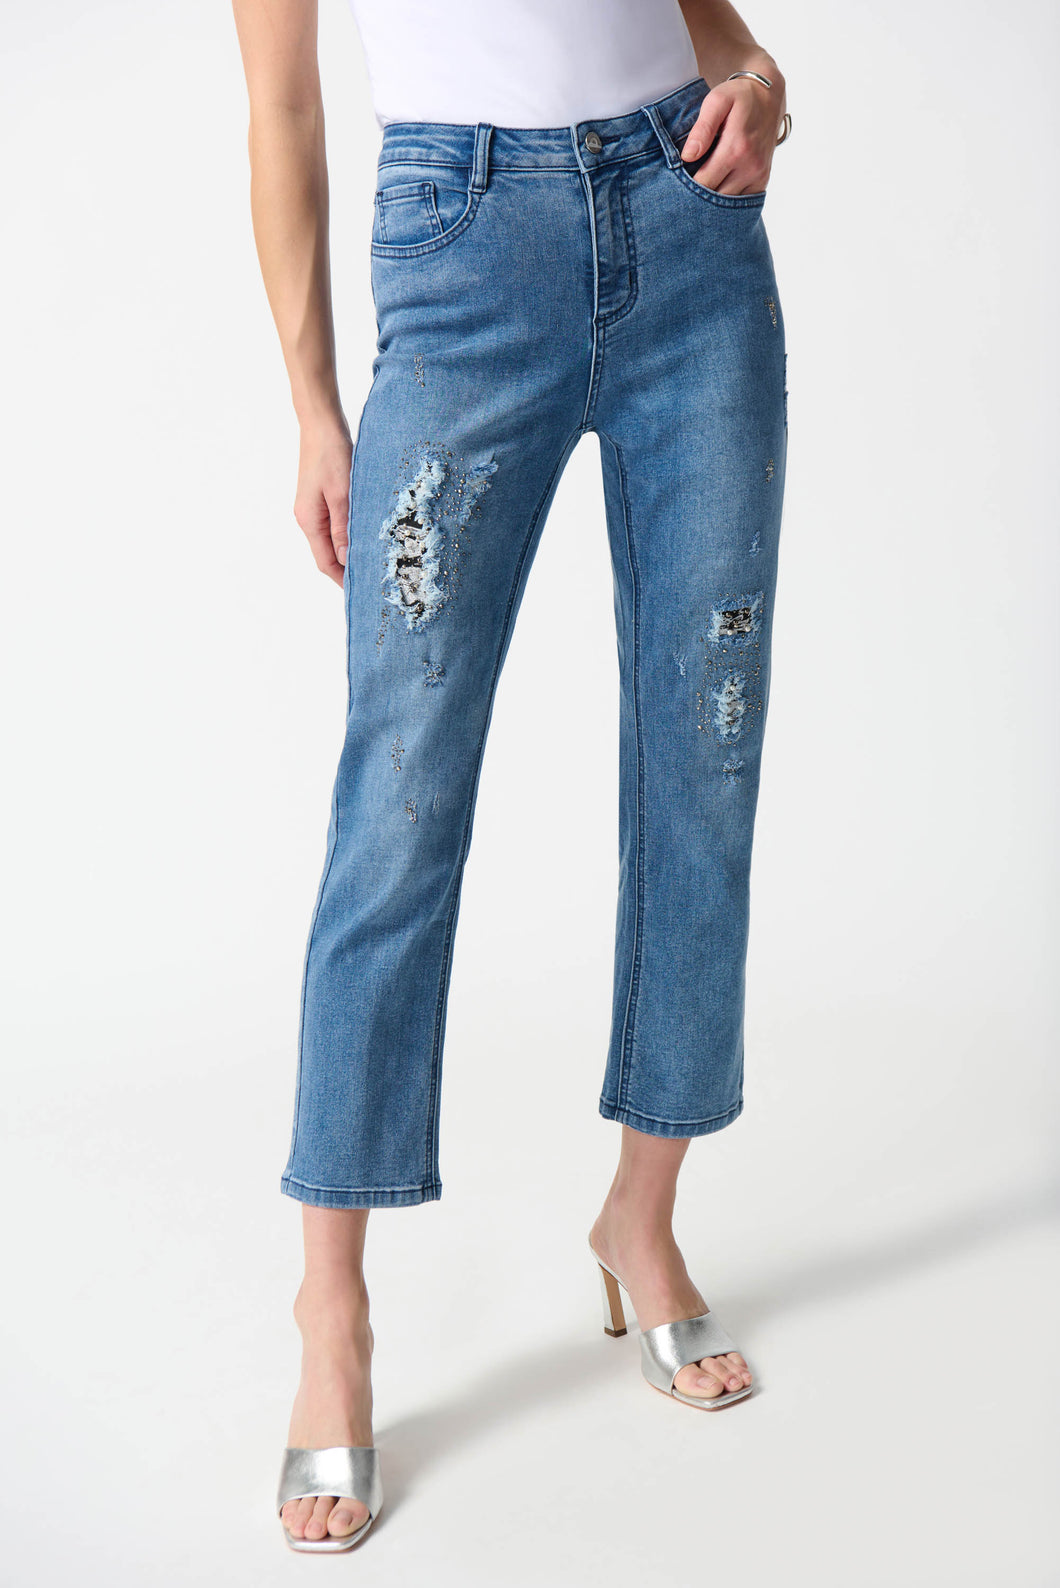 Joseph Ribkoff Denim Medium Blue Slim Fit Cropped Embellished Jeans